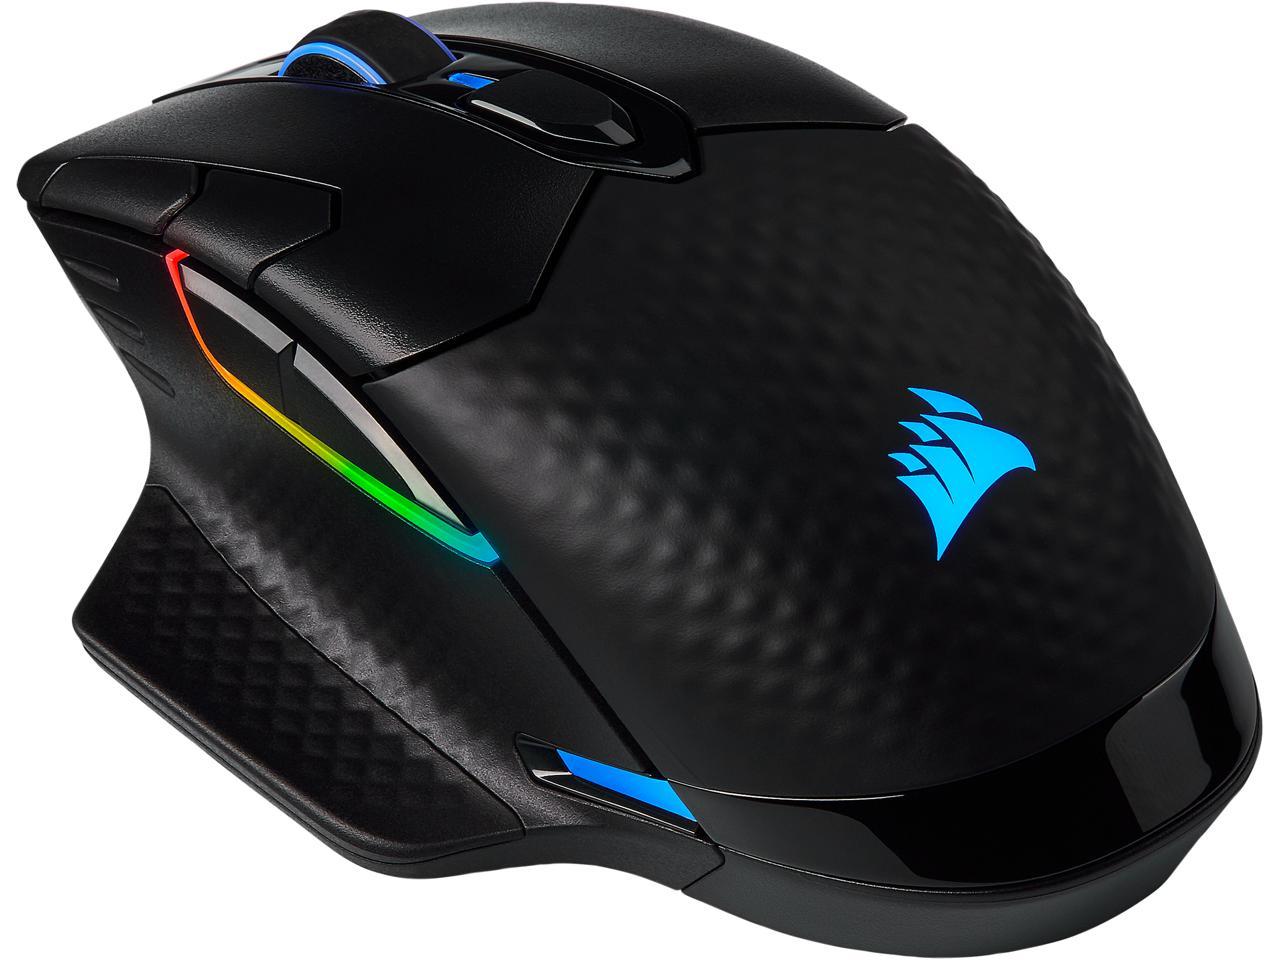 Corsair Dark Core RGB Pro Wireless Gaming Mouse $70 + Free Shipping